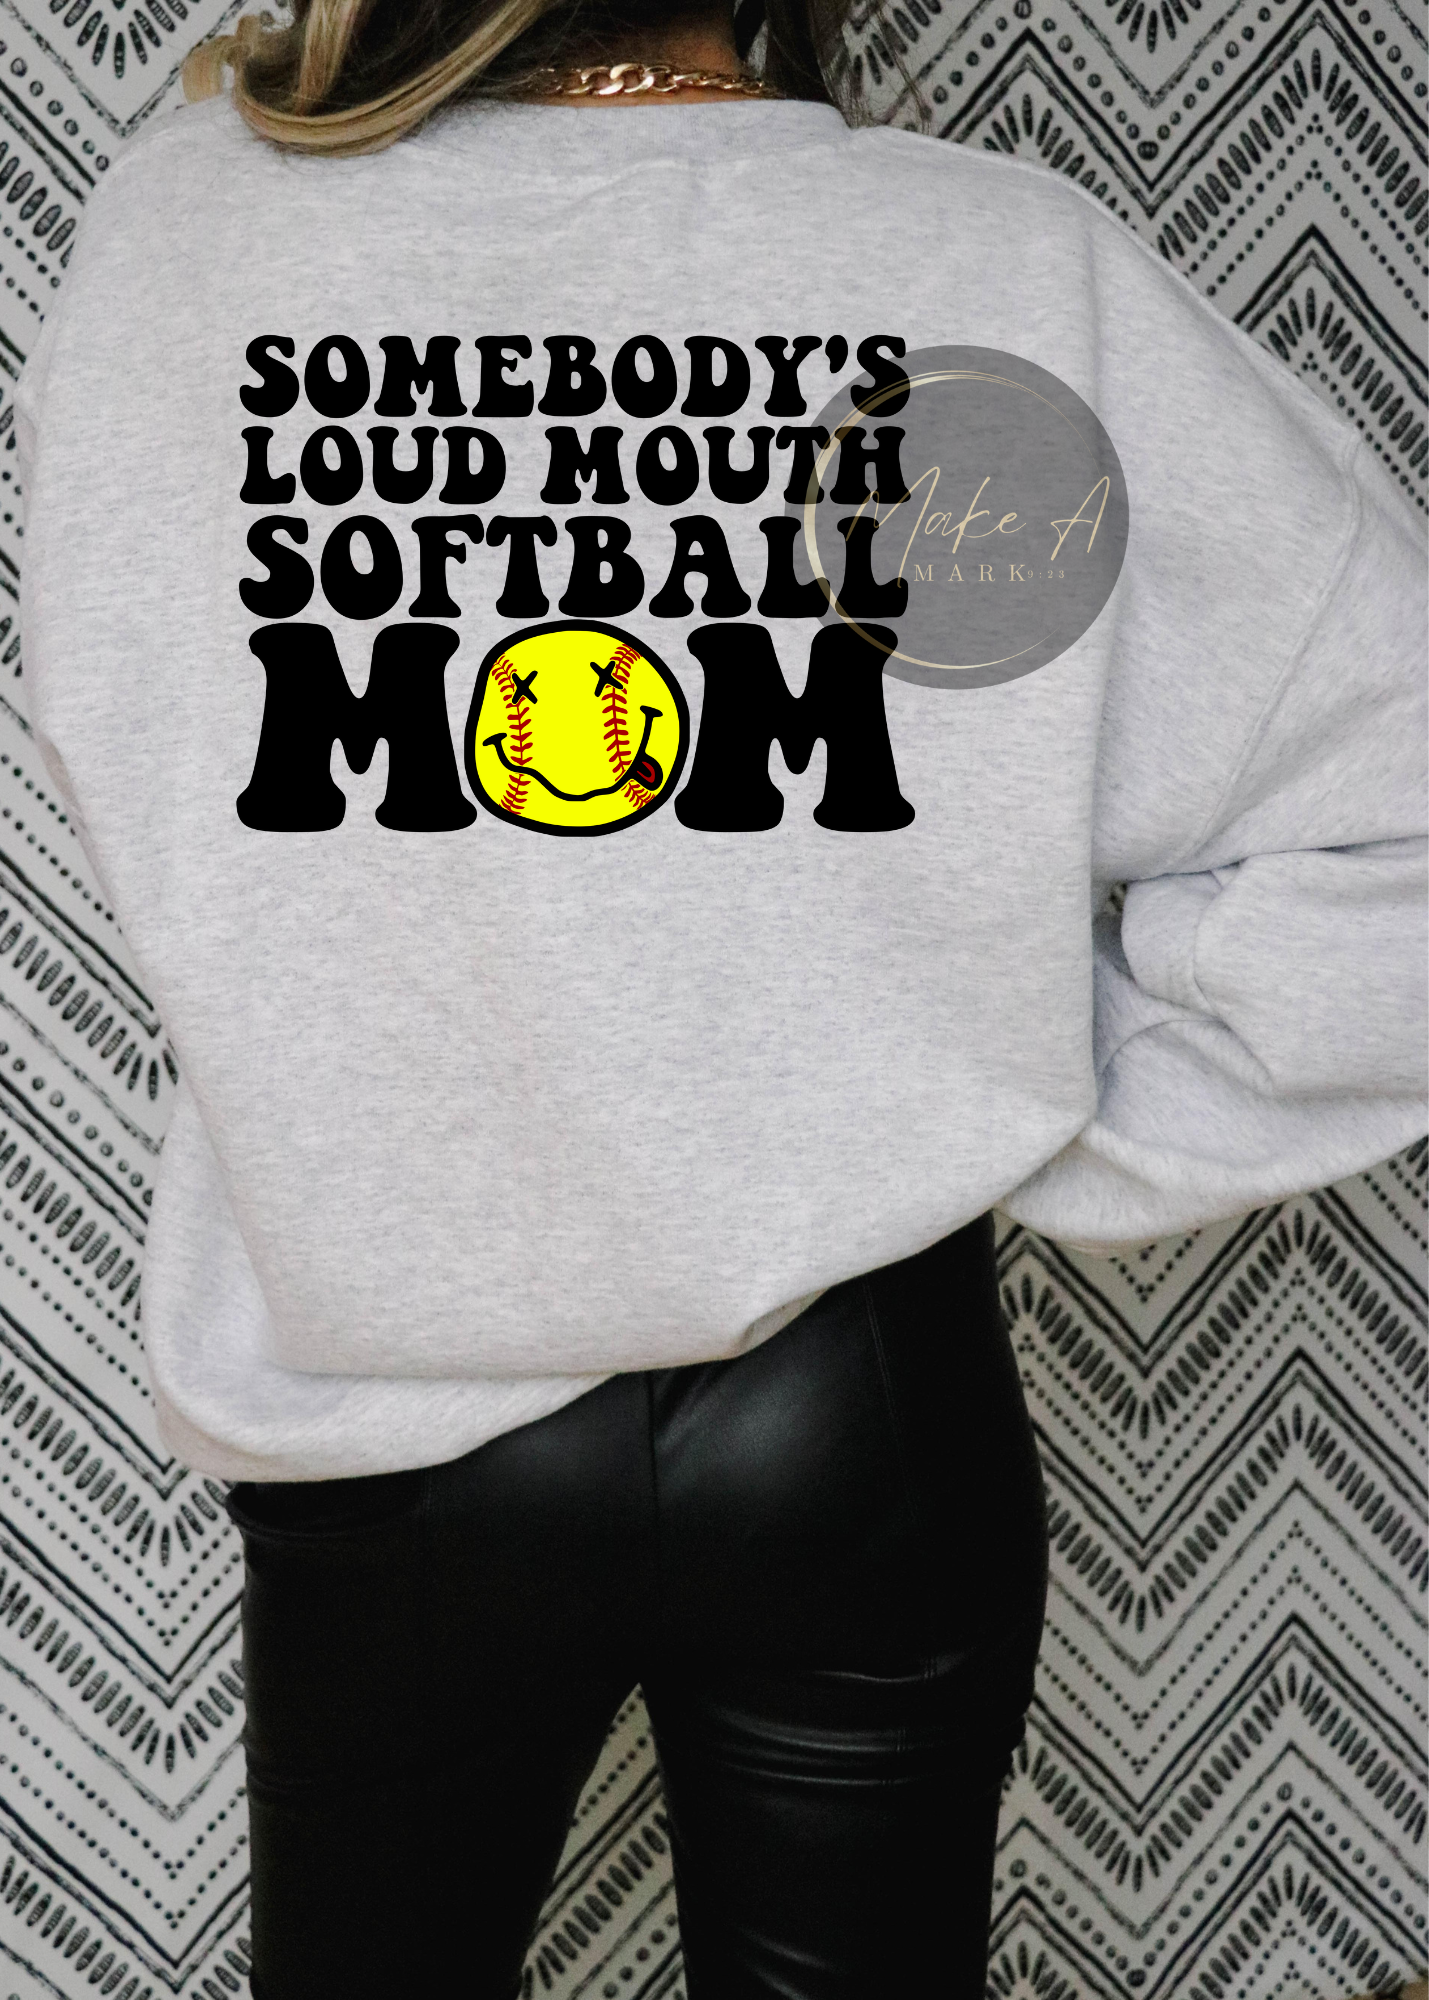 Loud mouth softball mom crewneck sweater